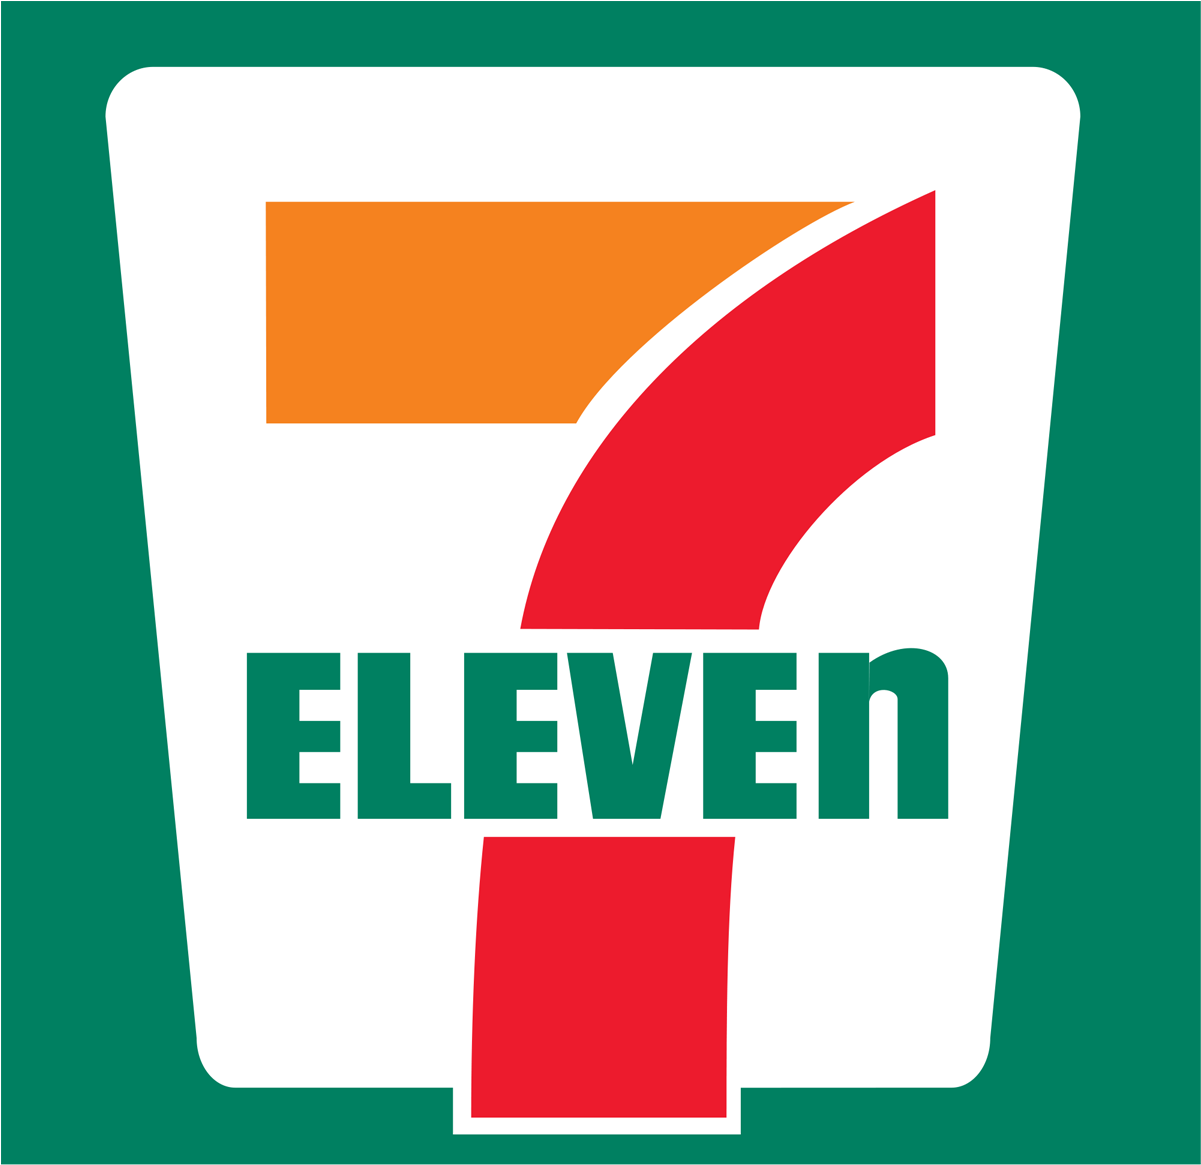 7 Eleven Brand Logo - 7 11 Logo (2272x1704)